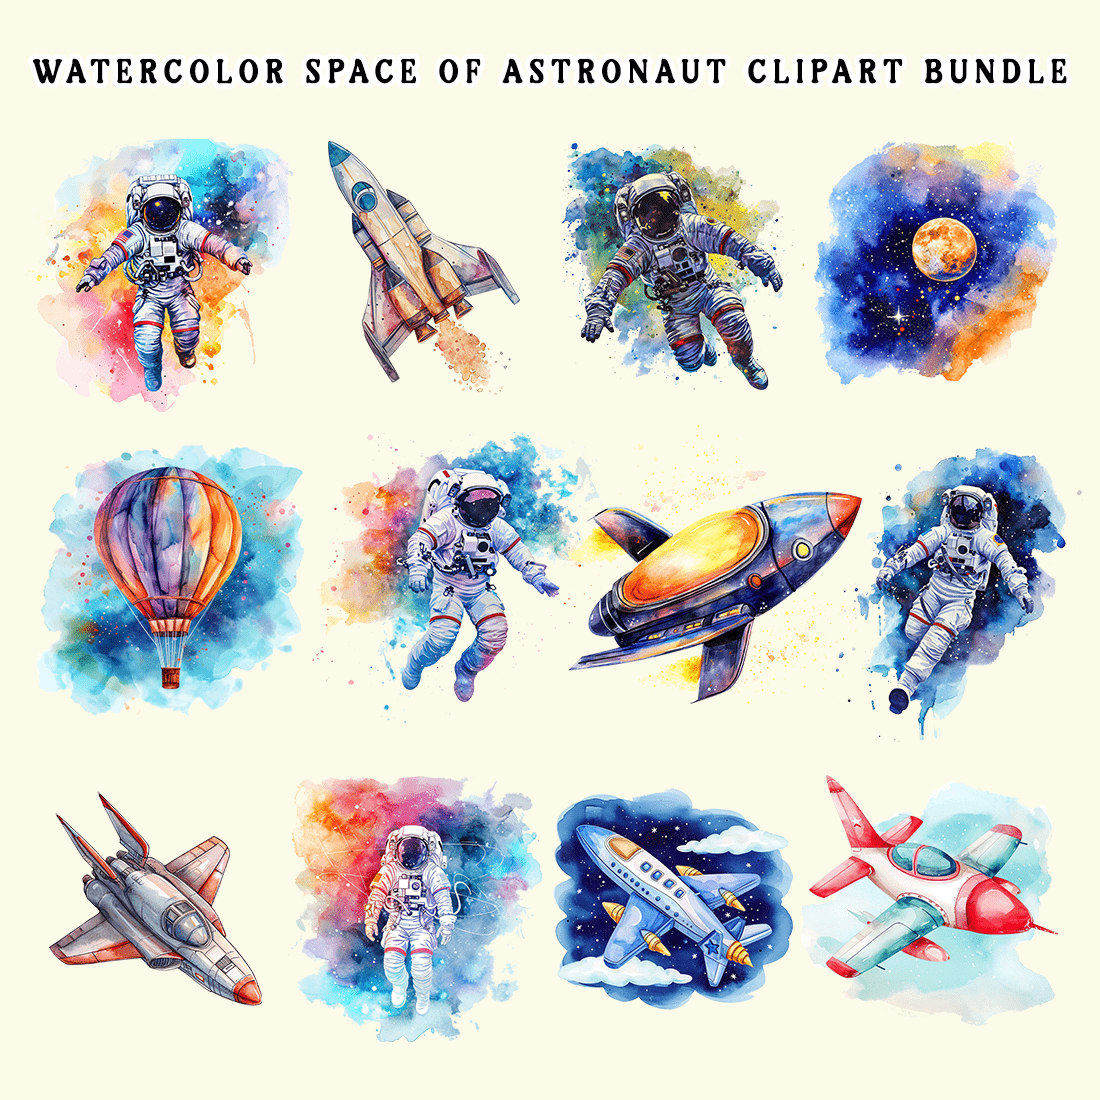 Watercolor Space of Astronaut Clipart Bundle preview image.